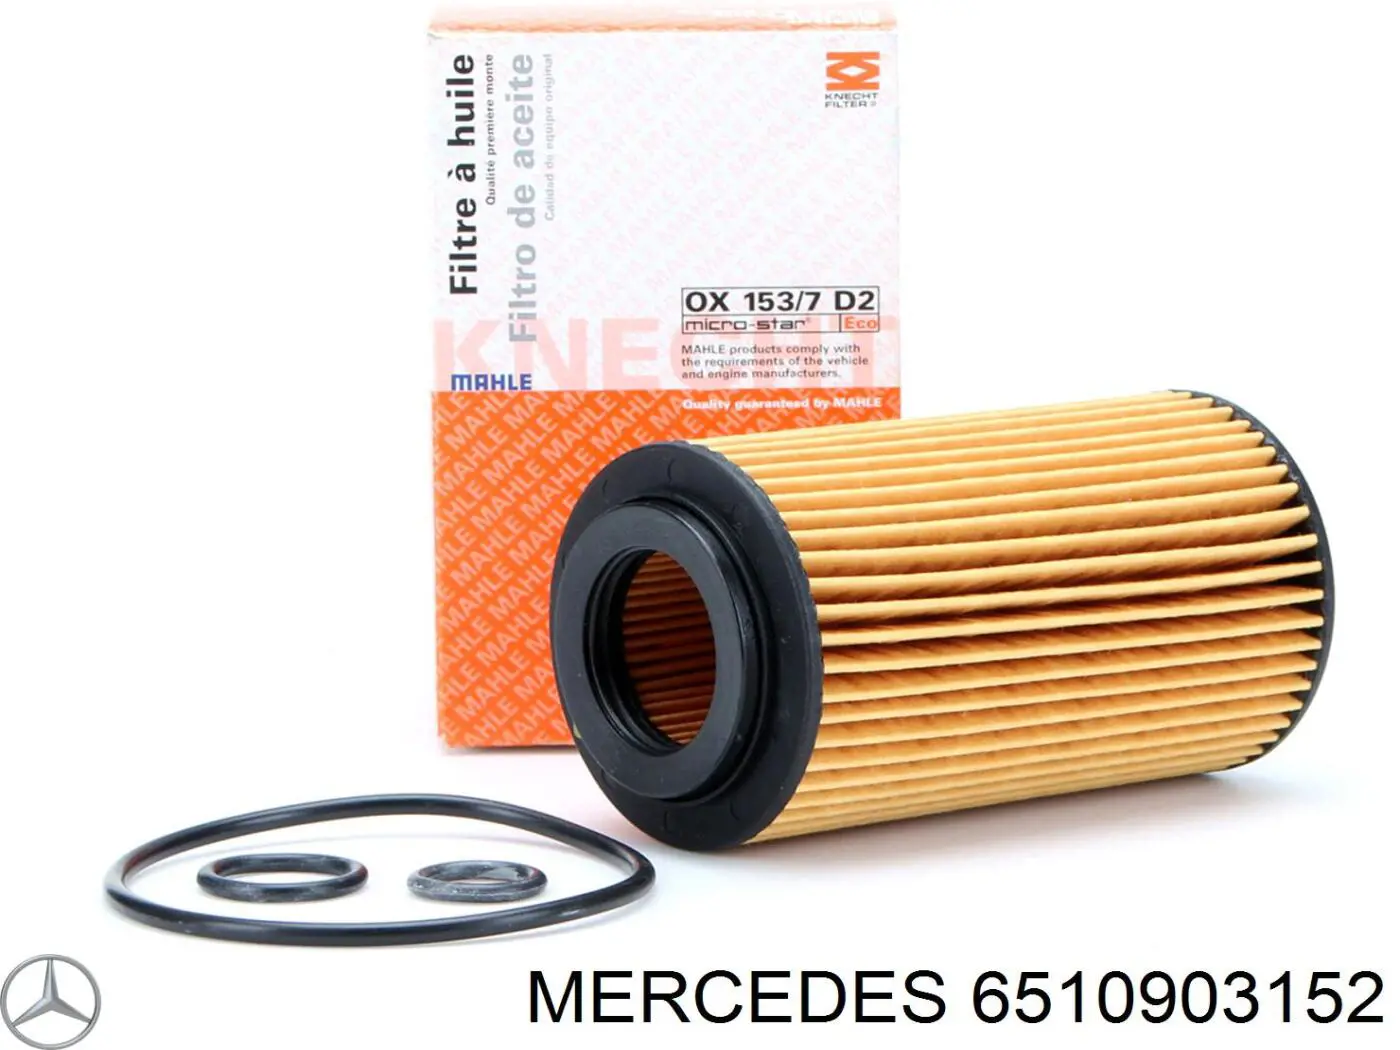 6510903152 Mercedes filtro combustible